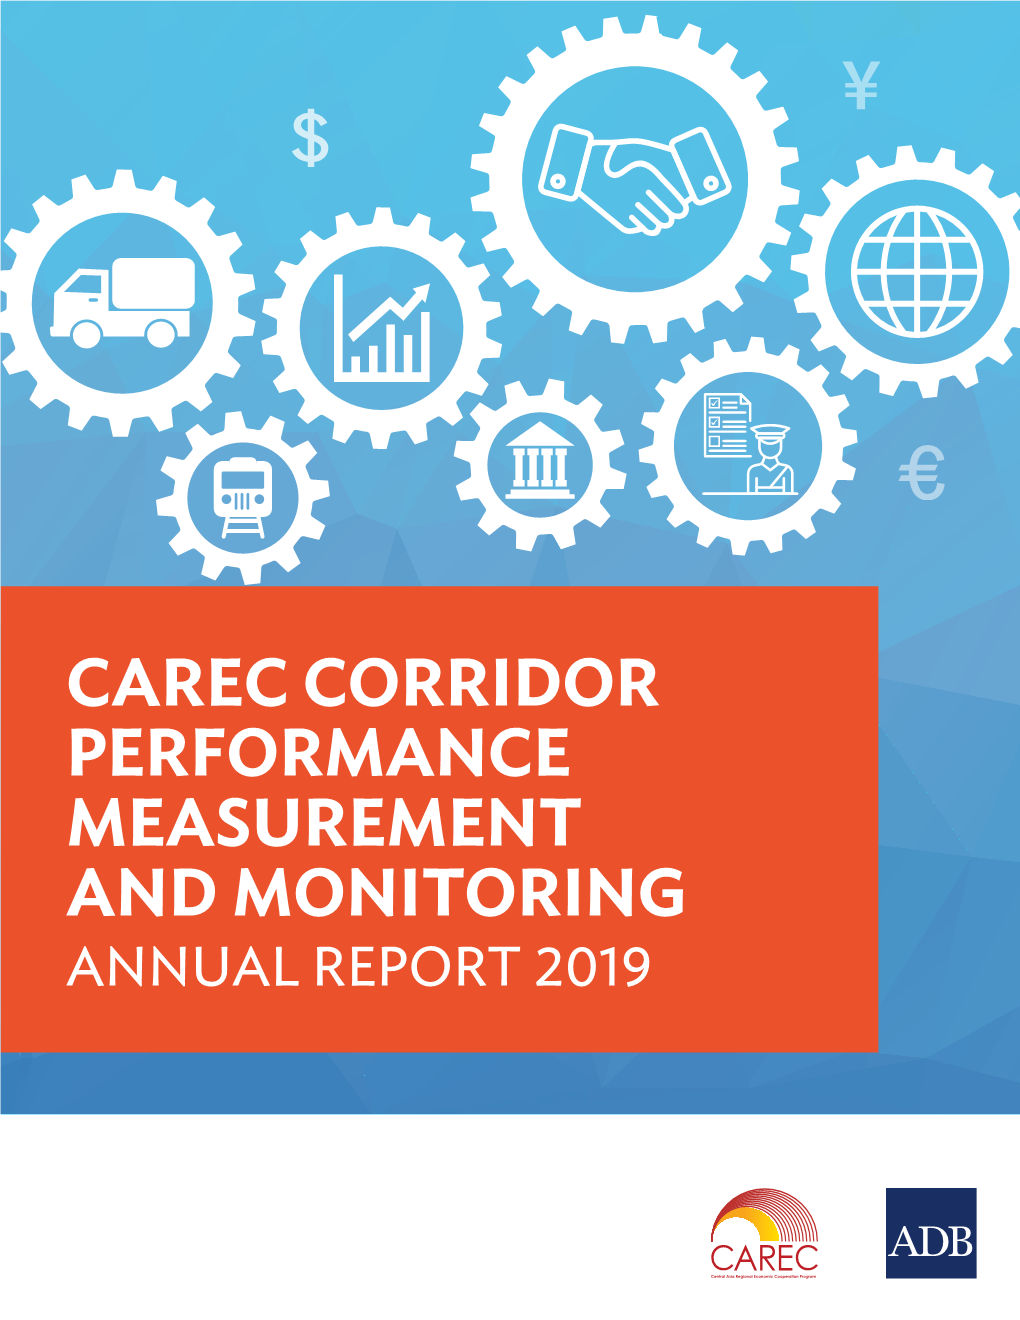 CAREC Corridor Performance Measurement and Monitoring Annual Report 2019